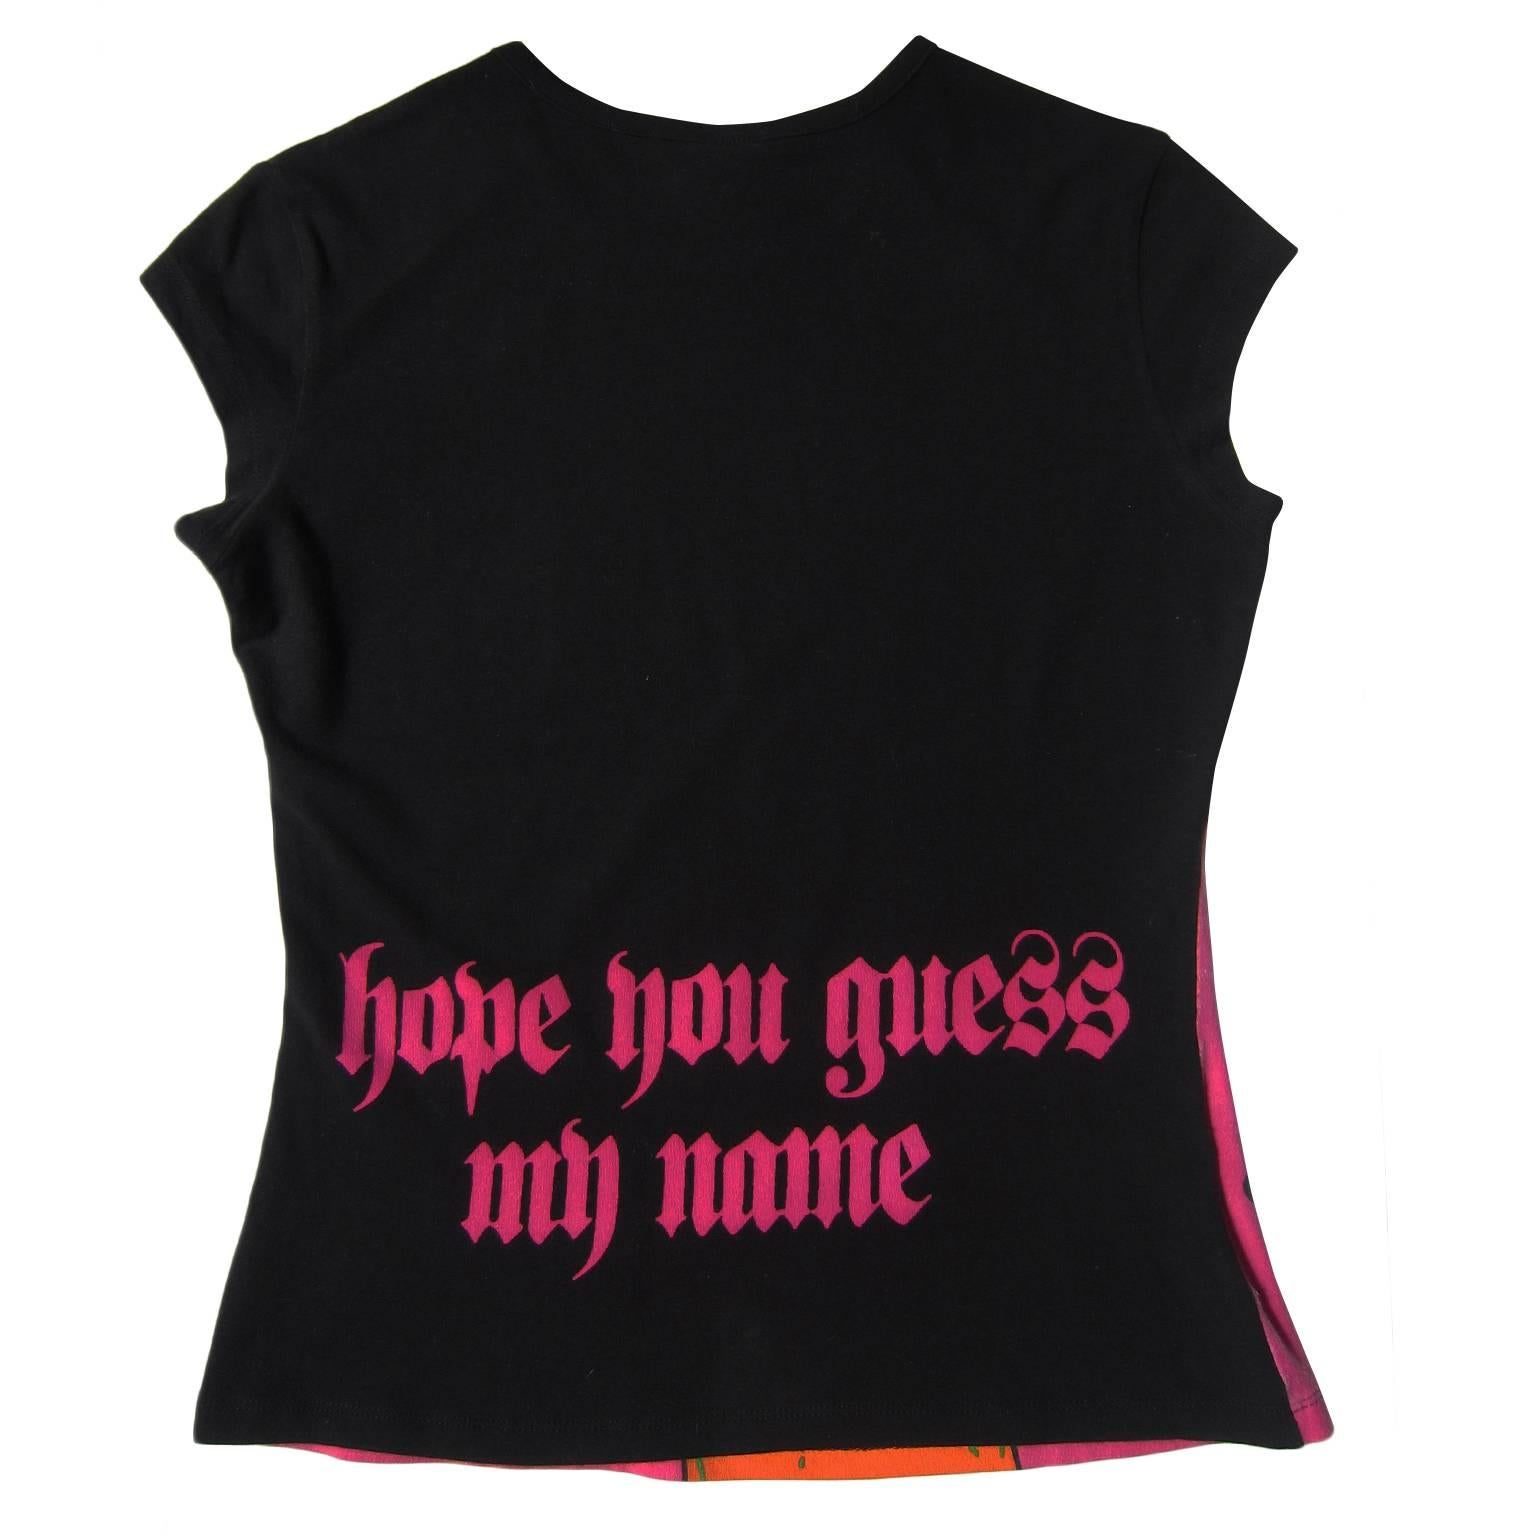 Versace jeans couture vivid color fun pop art style print T shirt of Donatella Versace. Rolling Stones 